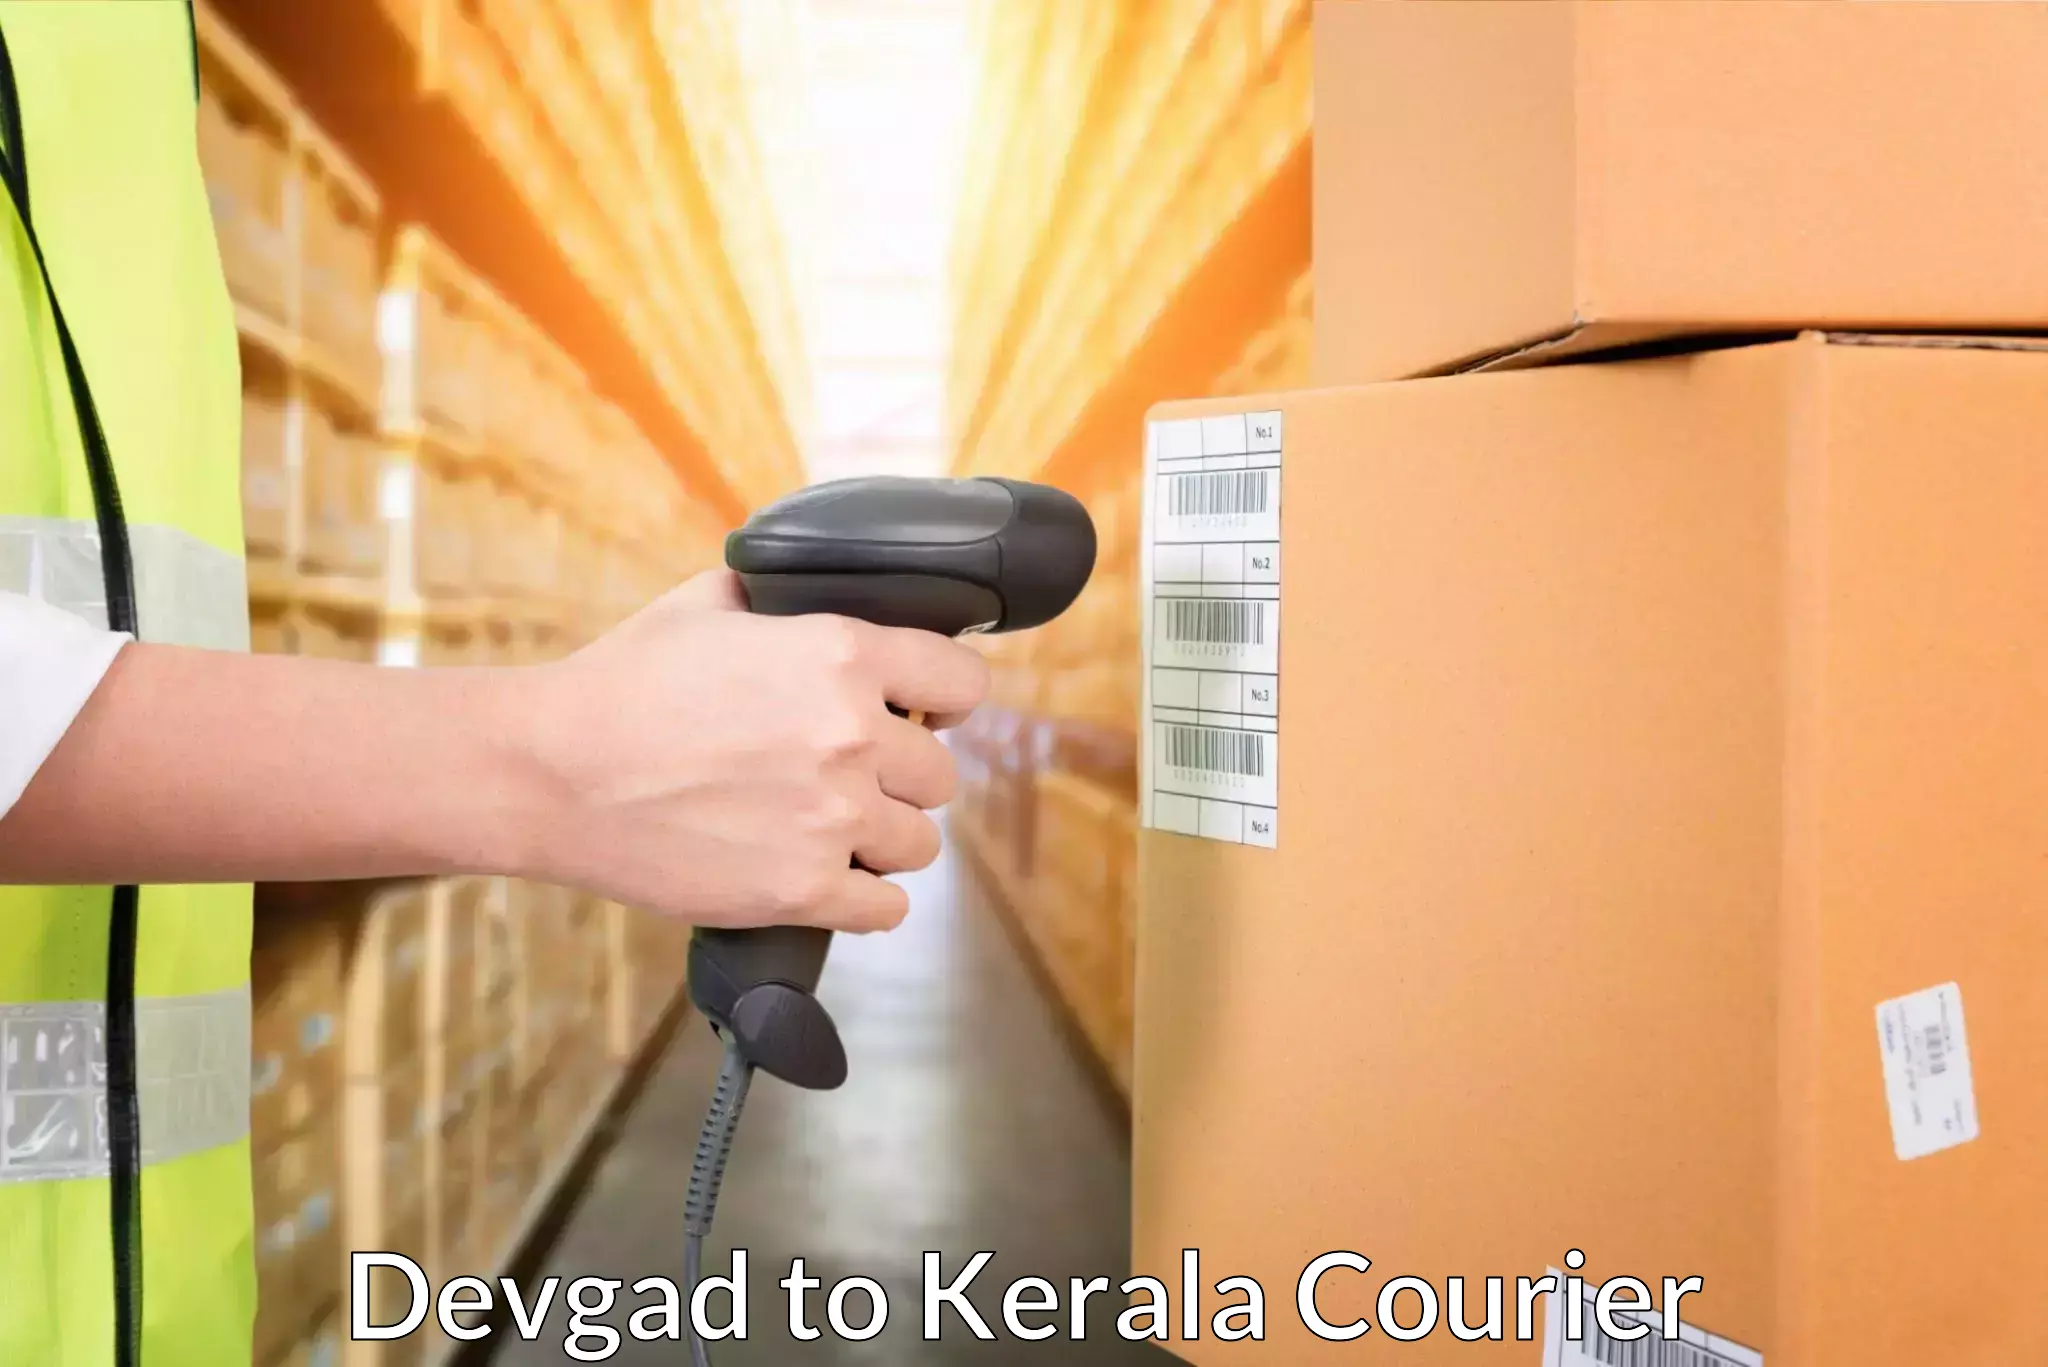 Global shipping networks Devgad to Kozhikode